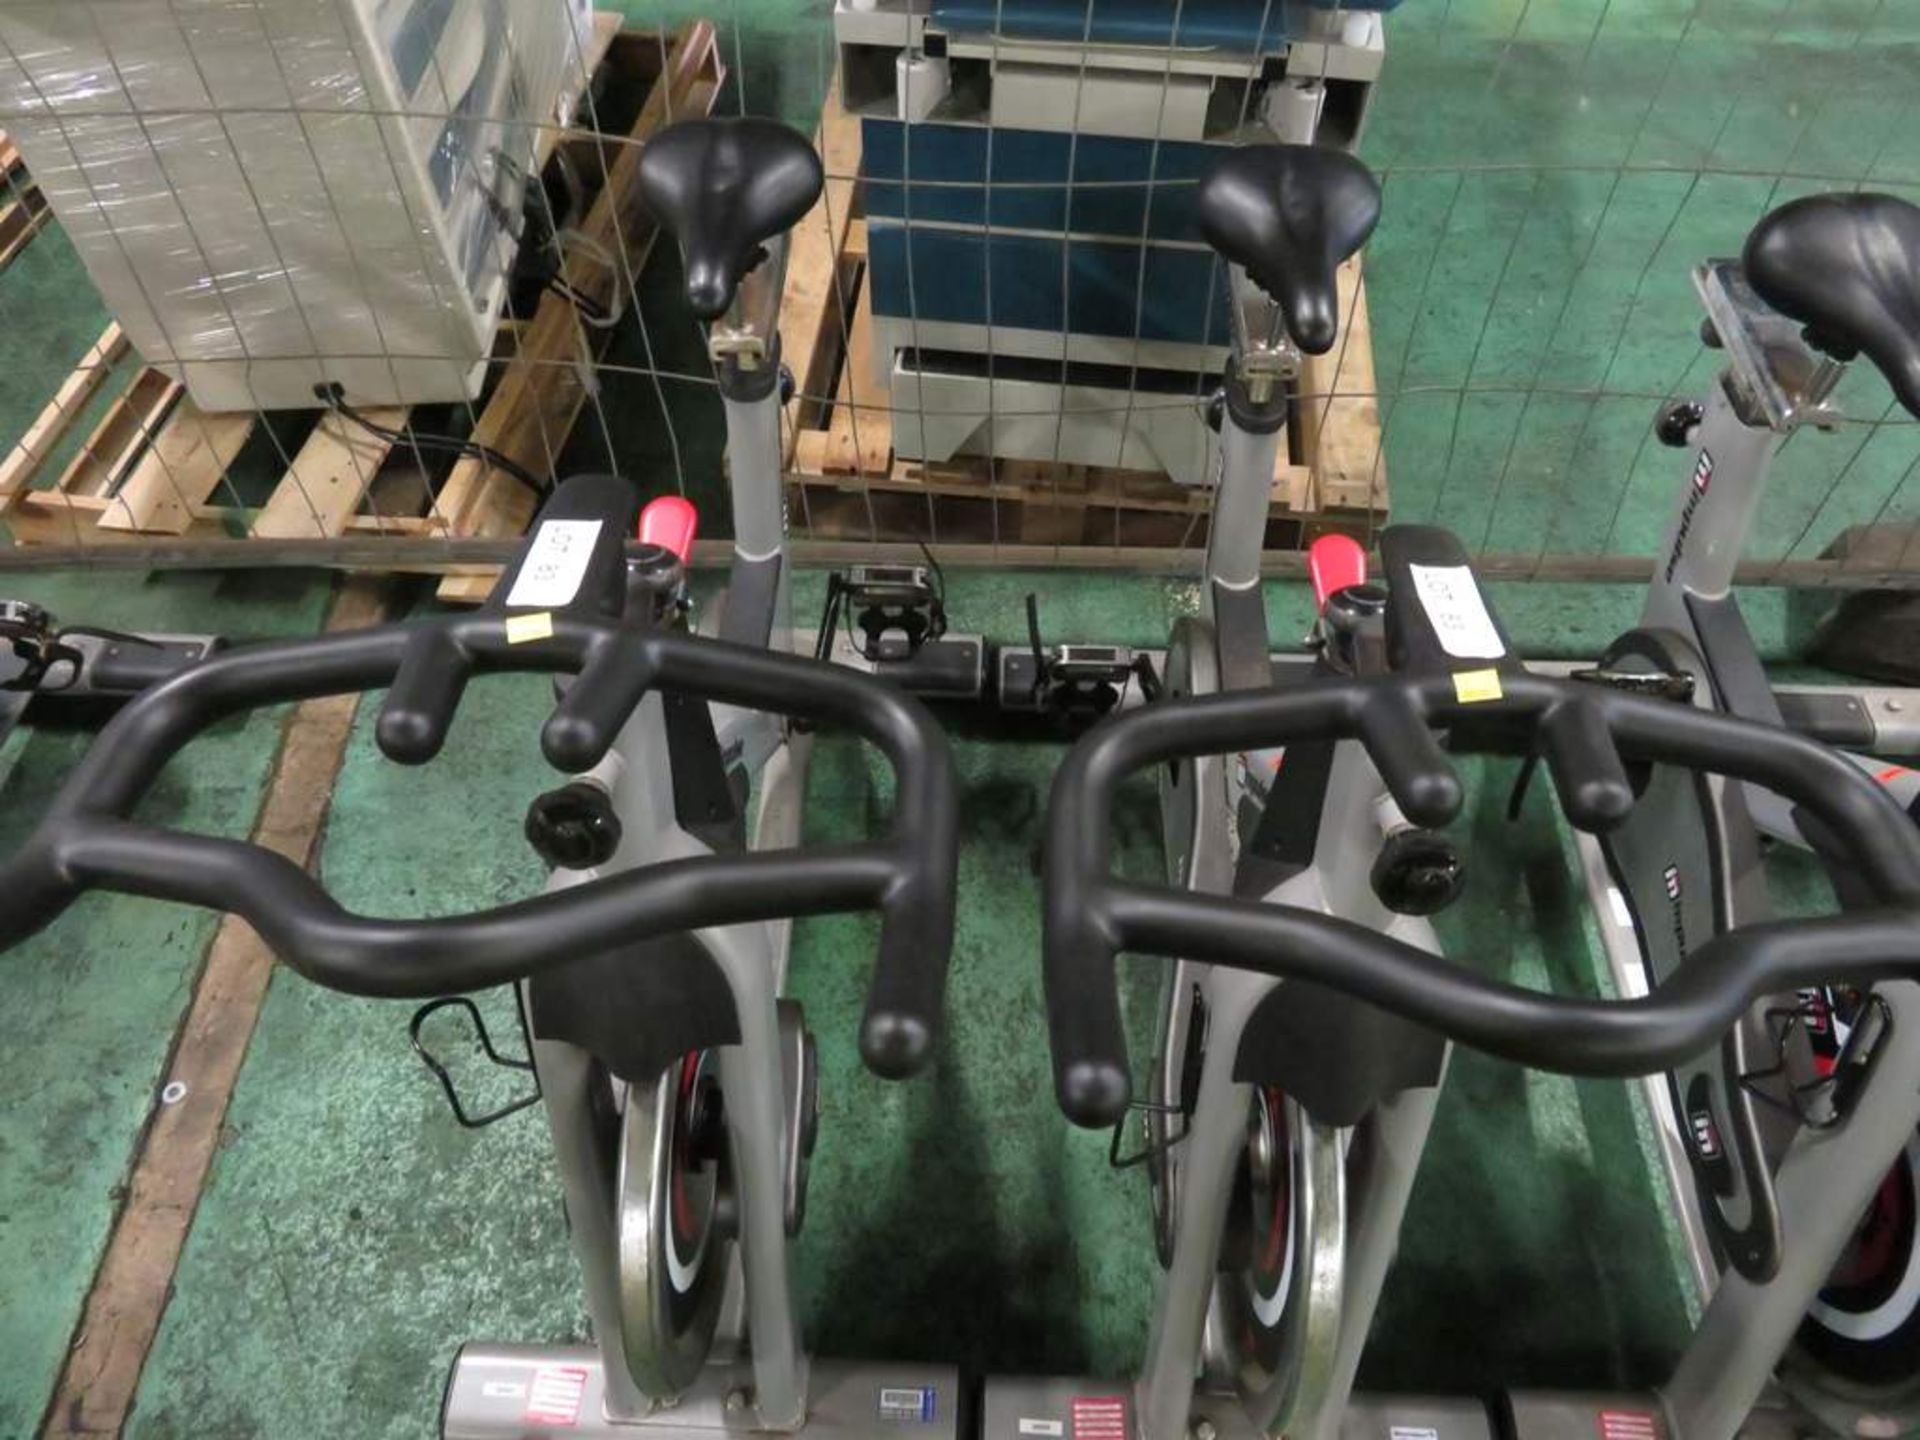 4x Impulse PS300 Indoor Exercise Bike, Adjustable Seat & Handle Bars. - Image 5 of 6